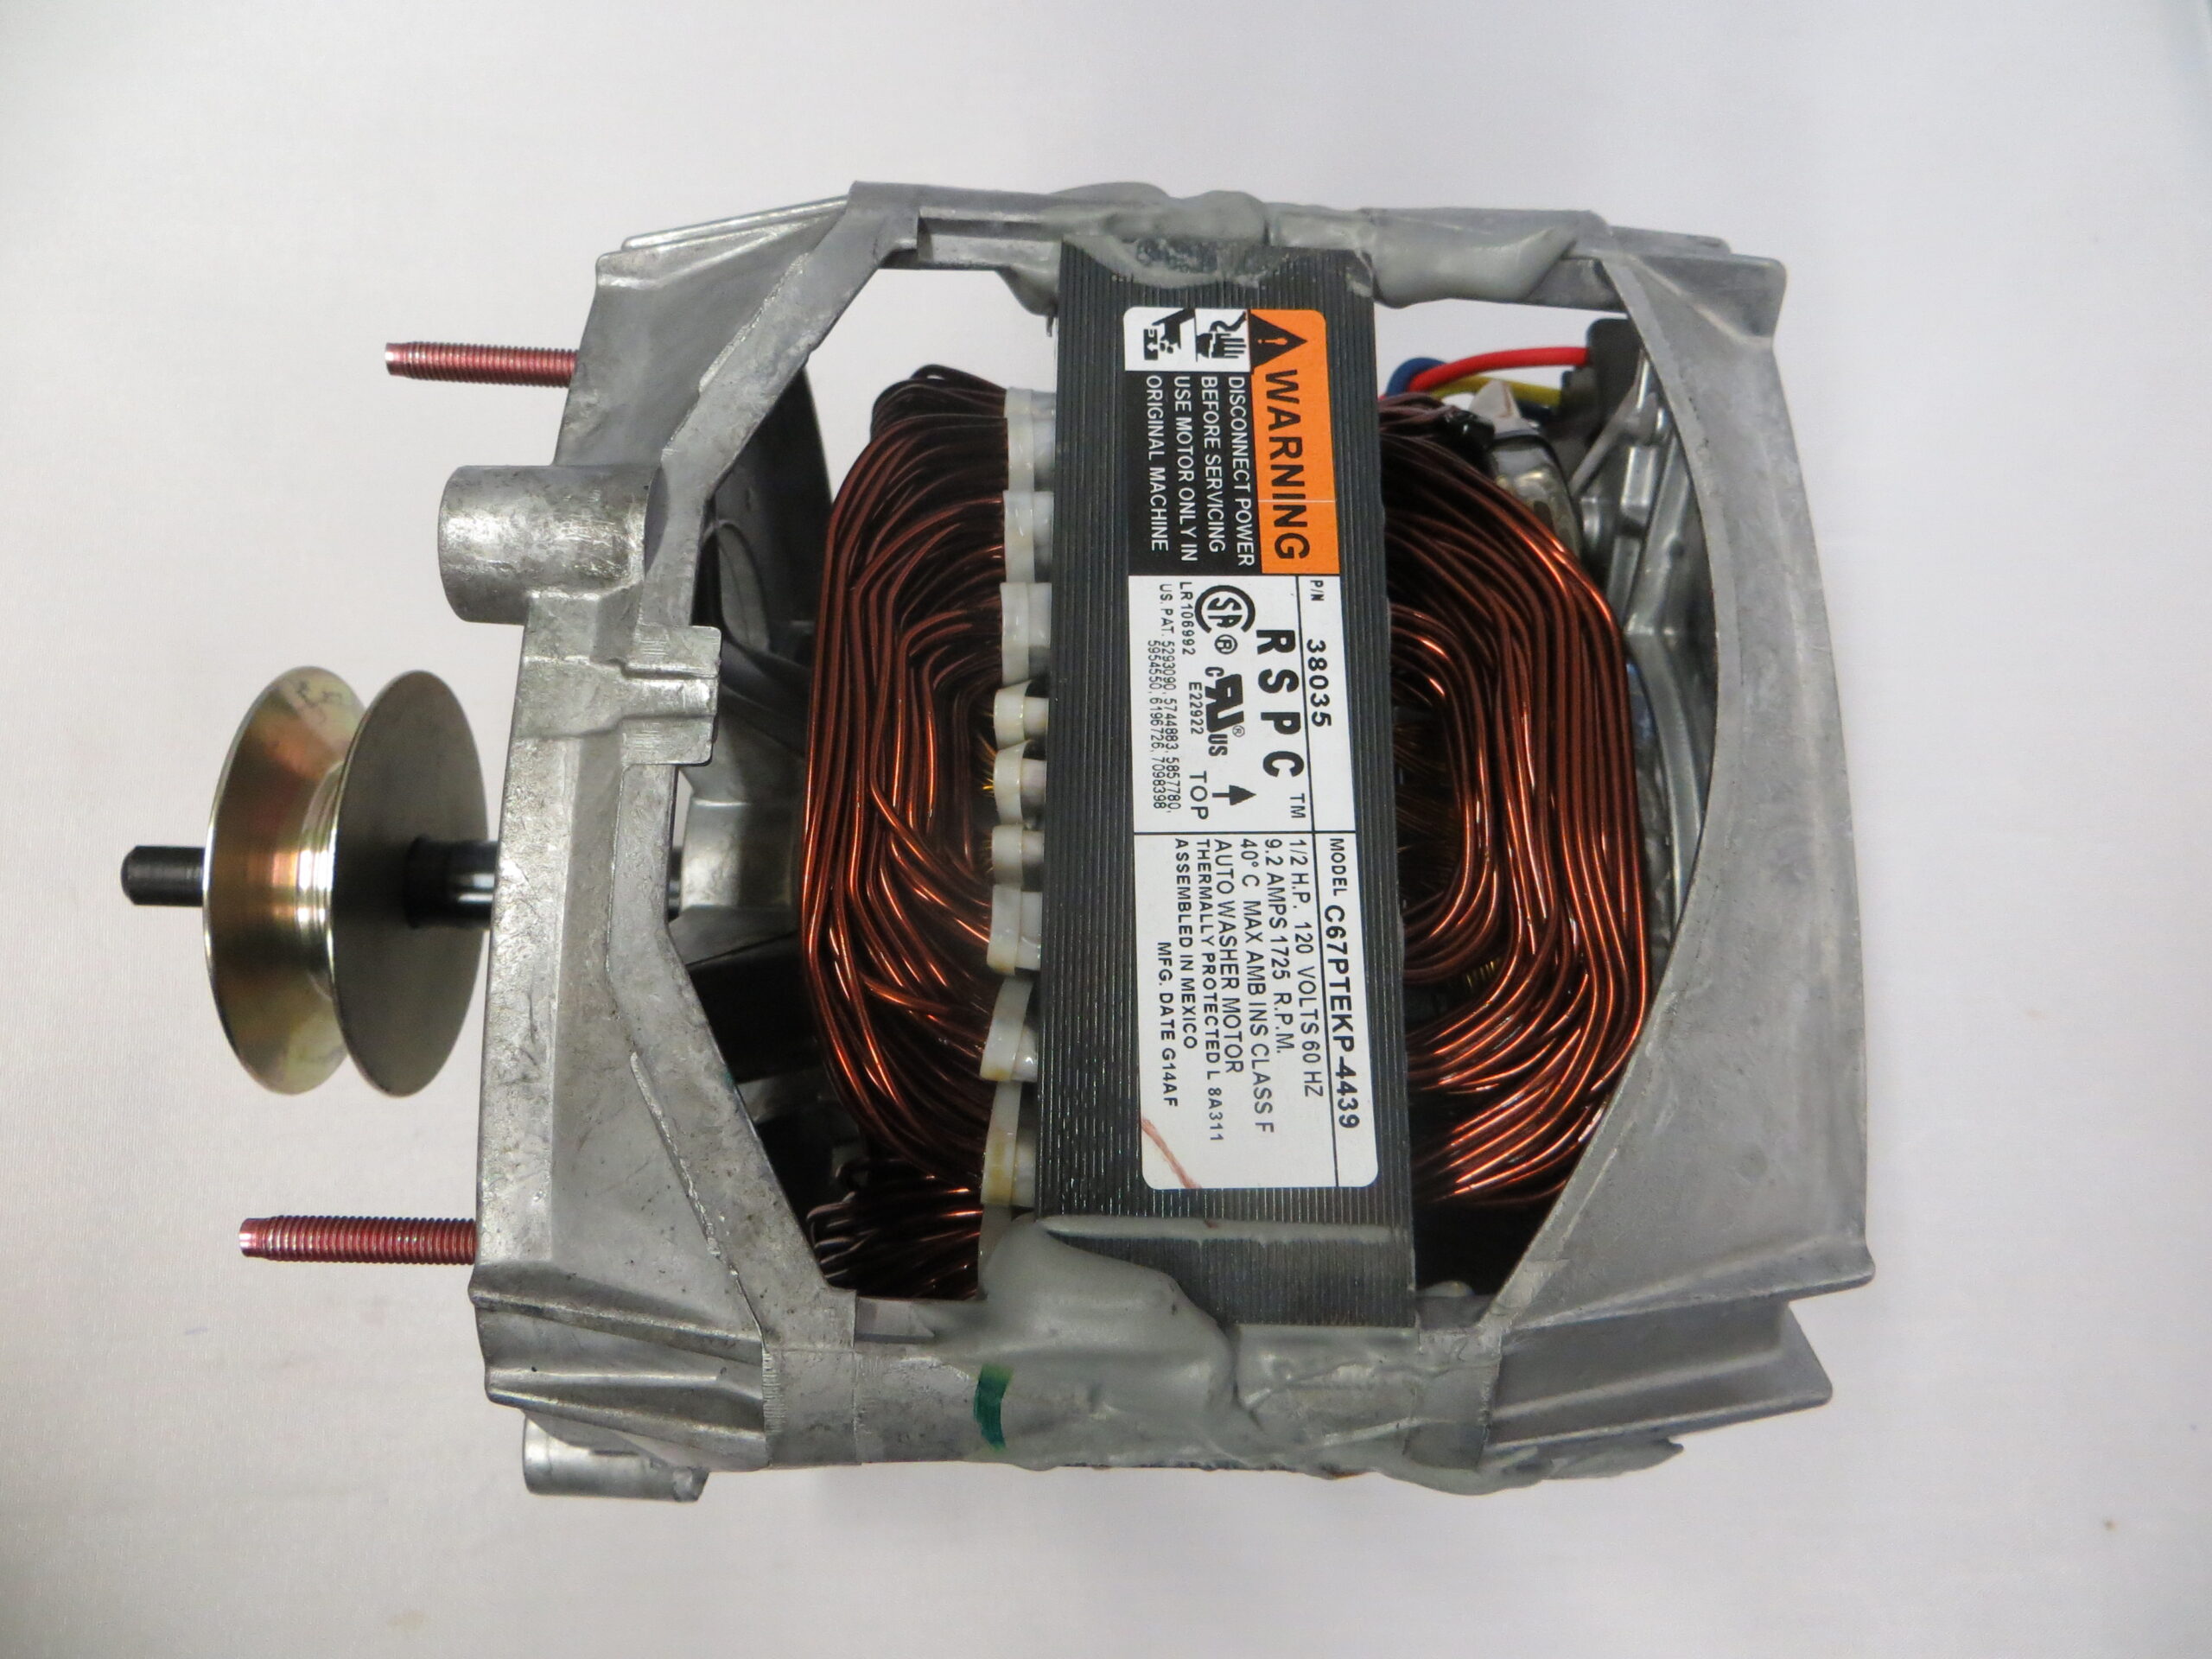 Speed Queen Commercial Washer Motor. Part #38035P